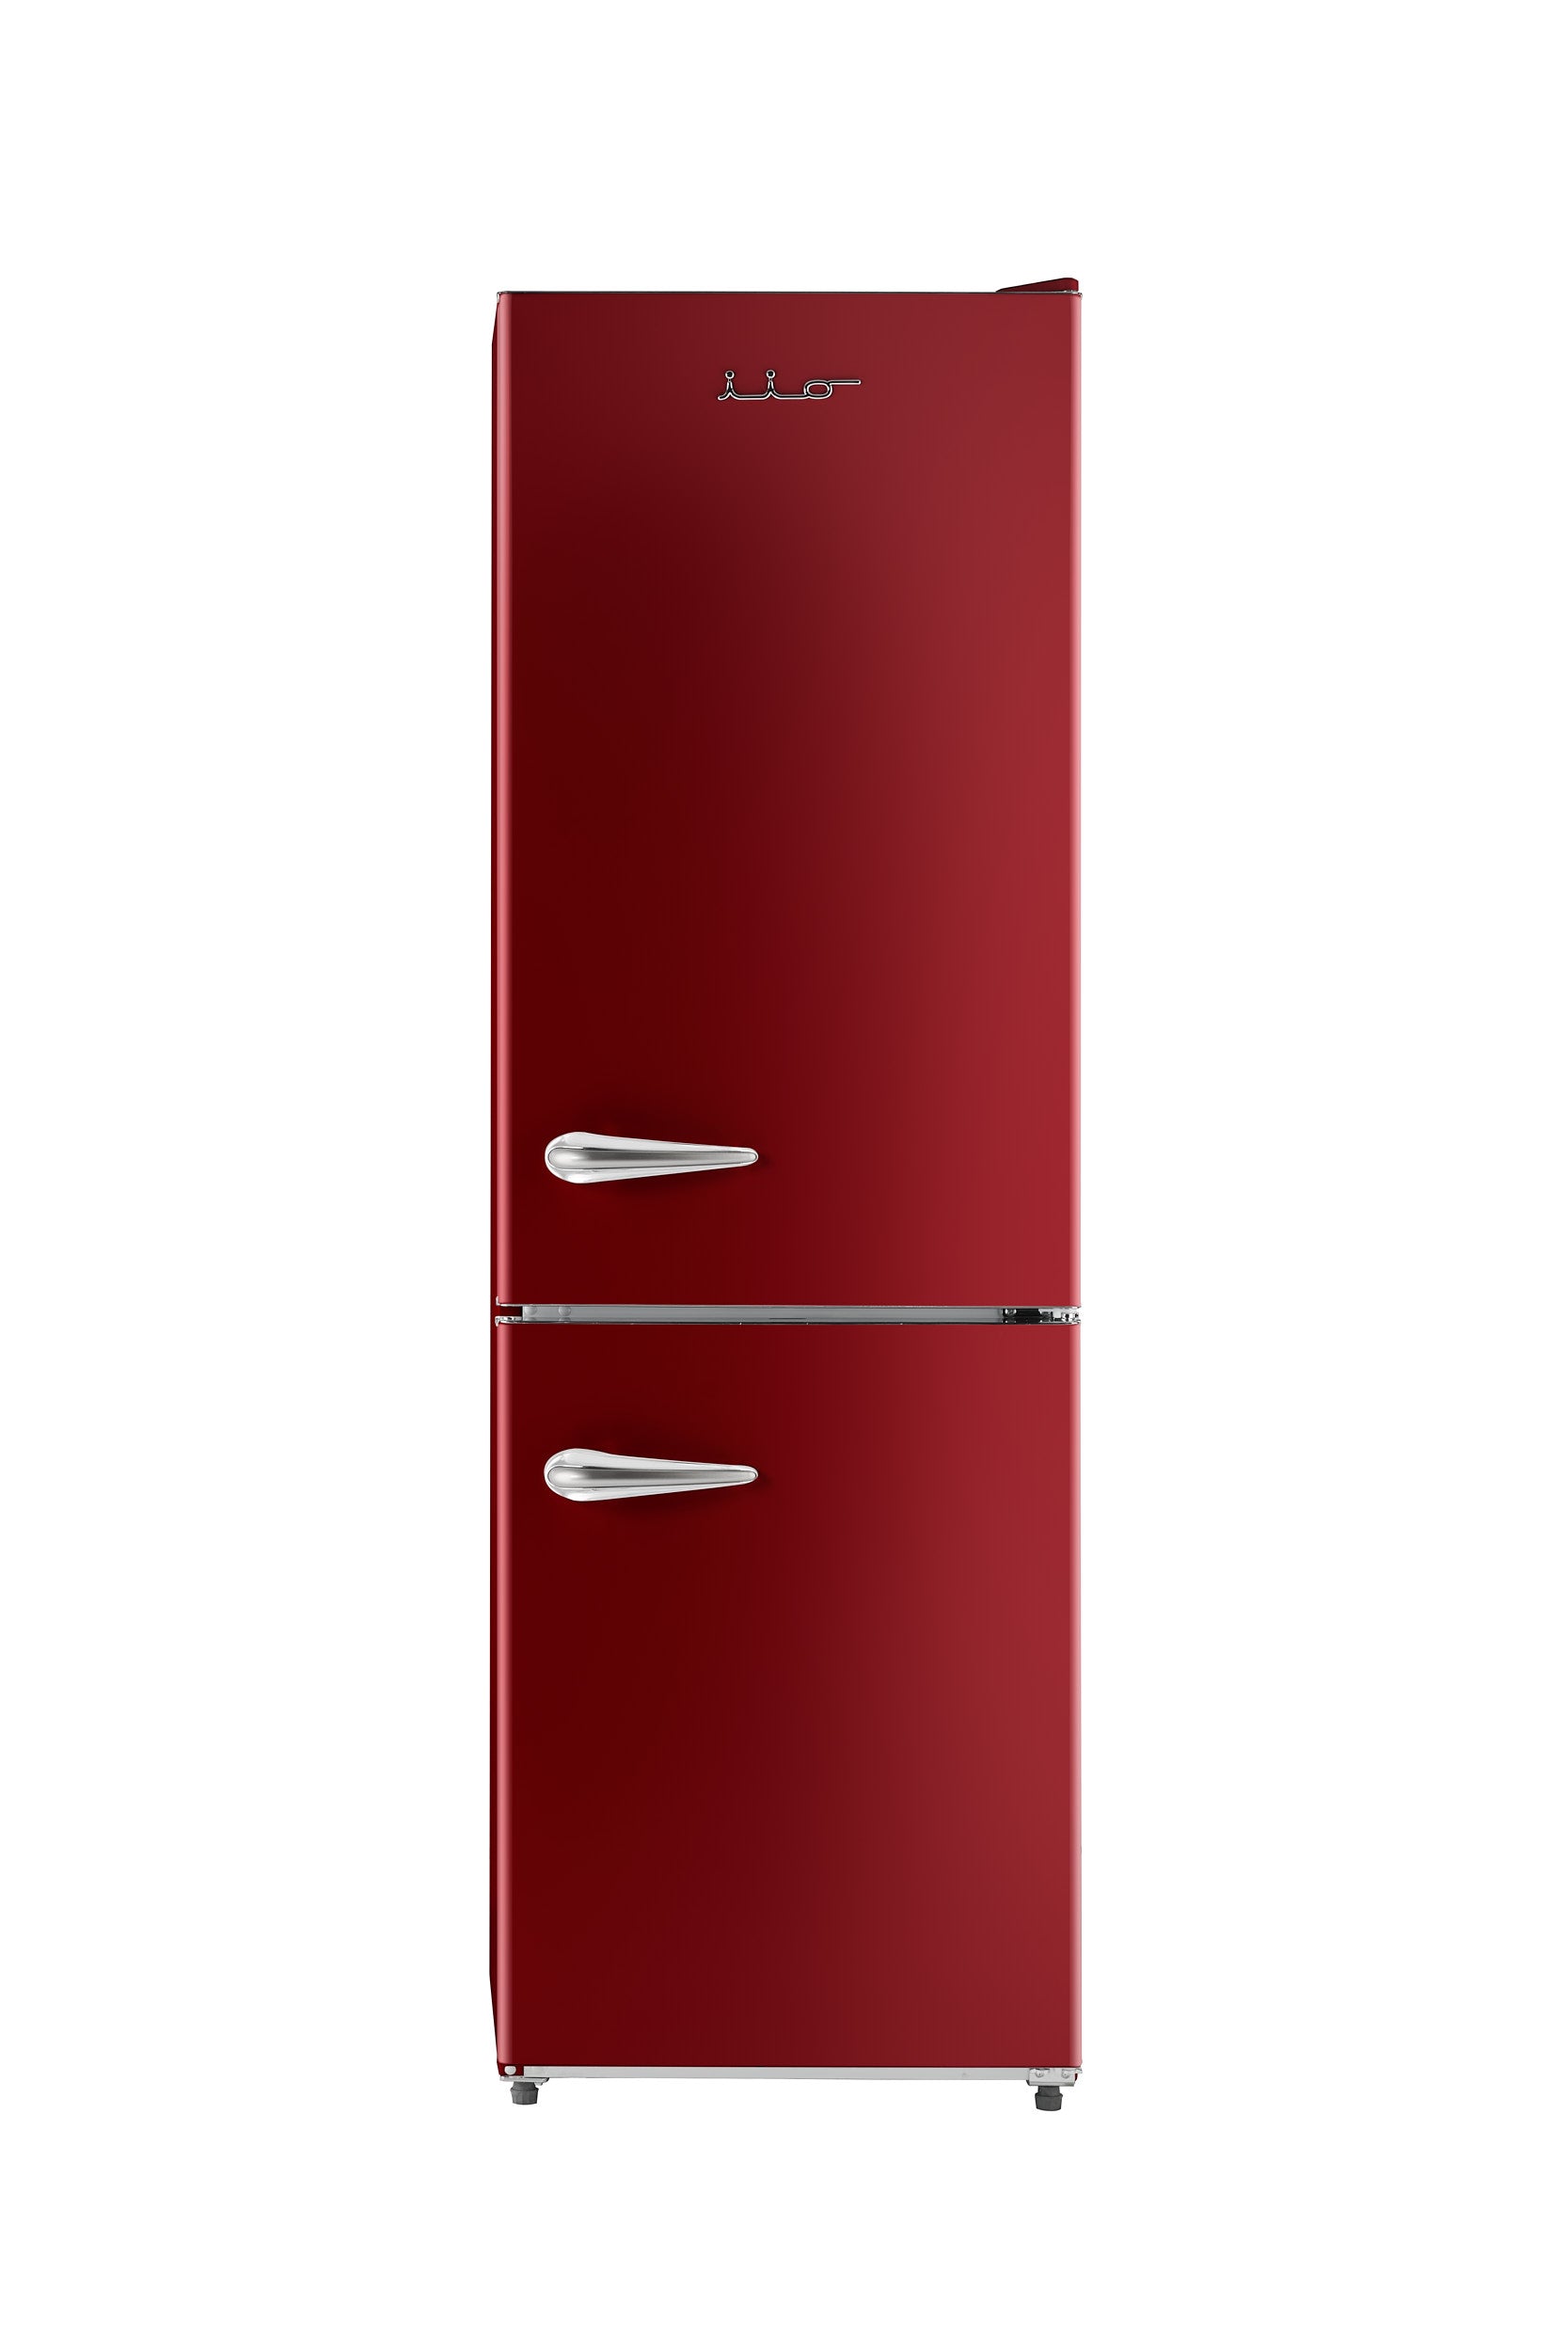 iio 11 Cu. Ft. Retro Refrigerator with Bottom Freezer in Red